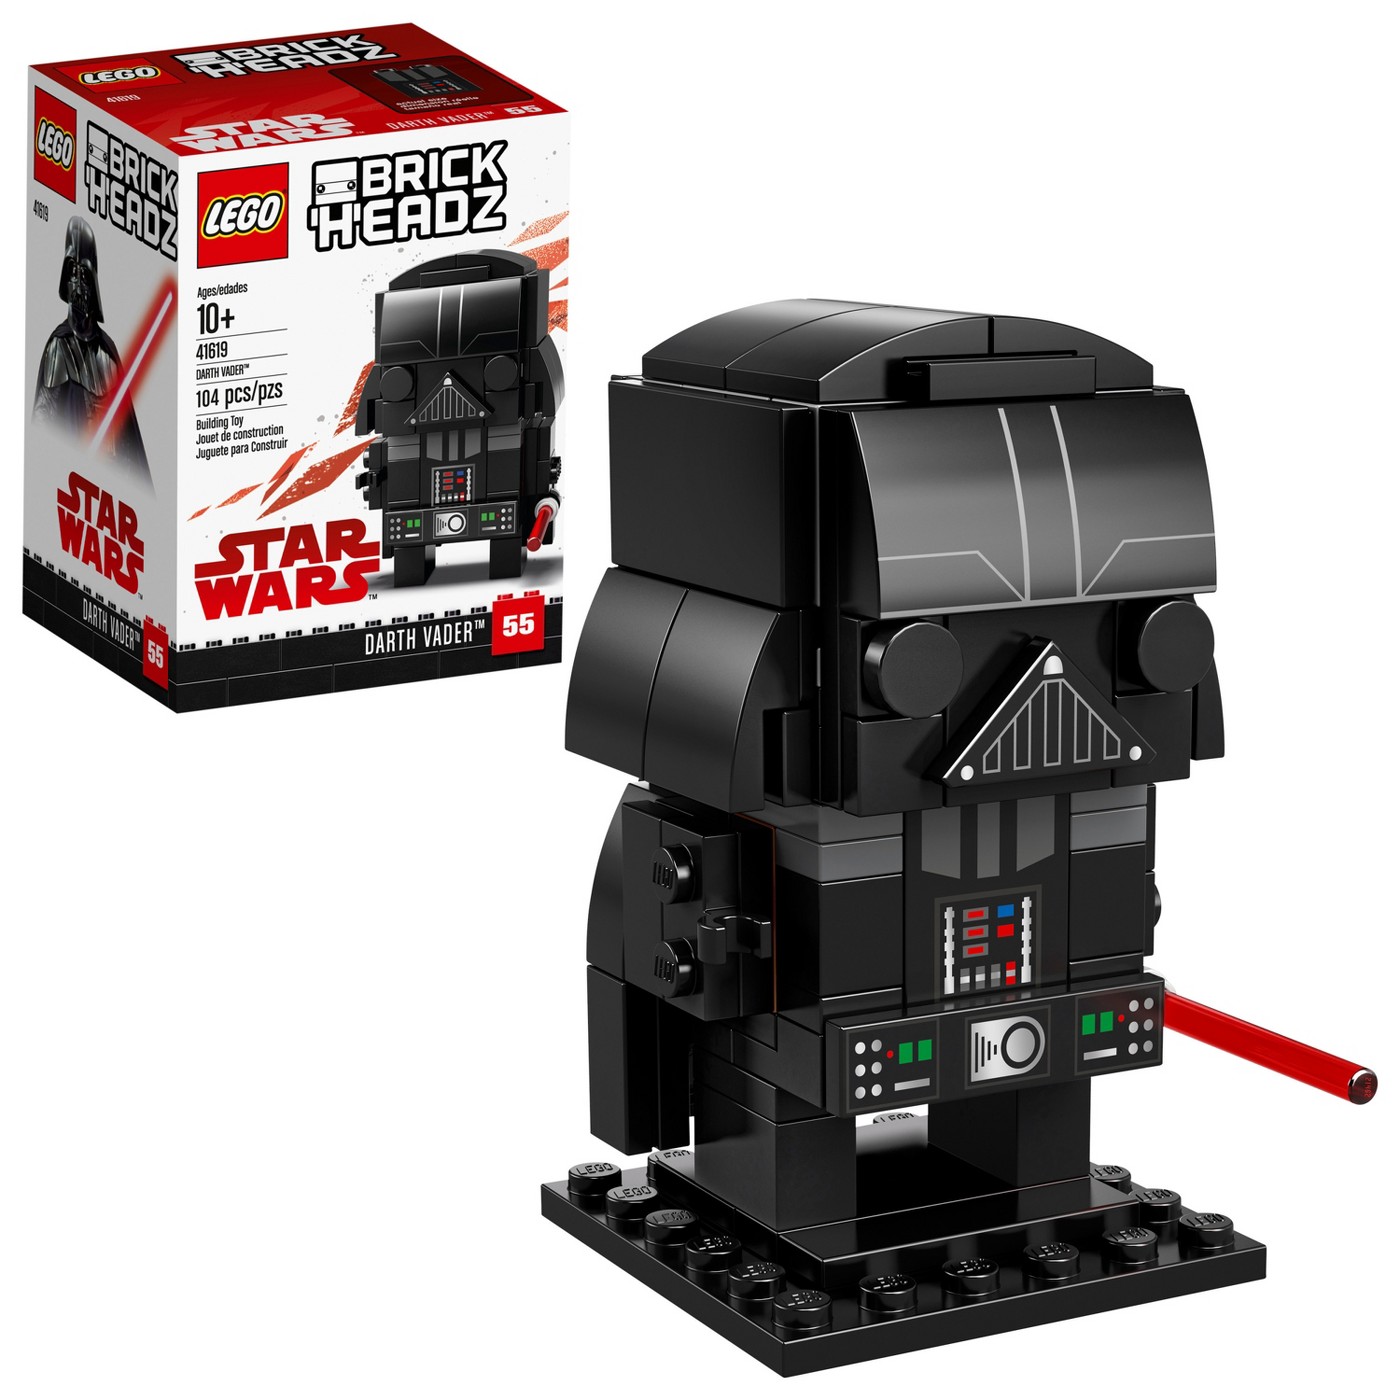 LEGO BrickHeadz Star Wars Darth Vader 41619 - image 1 of 6